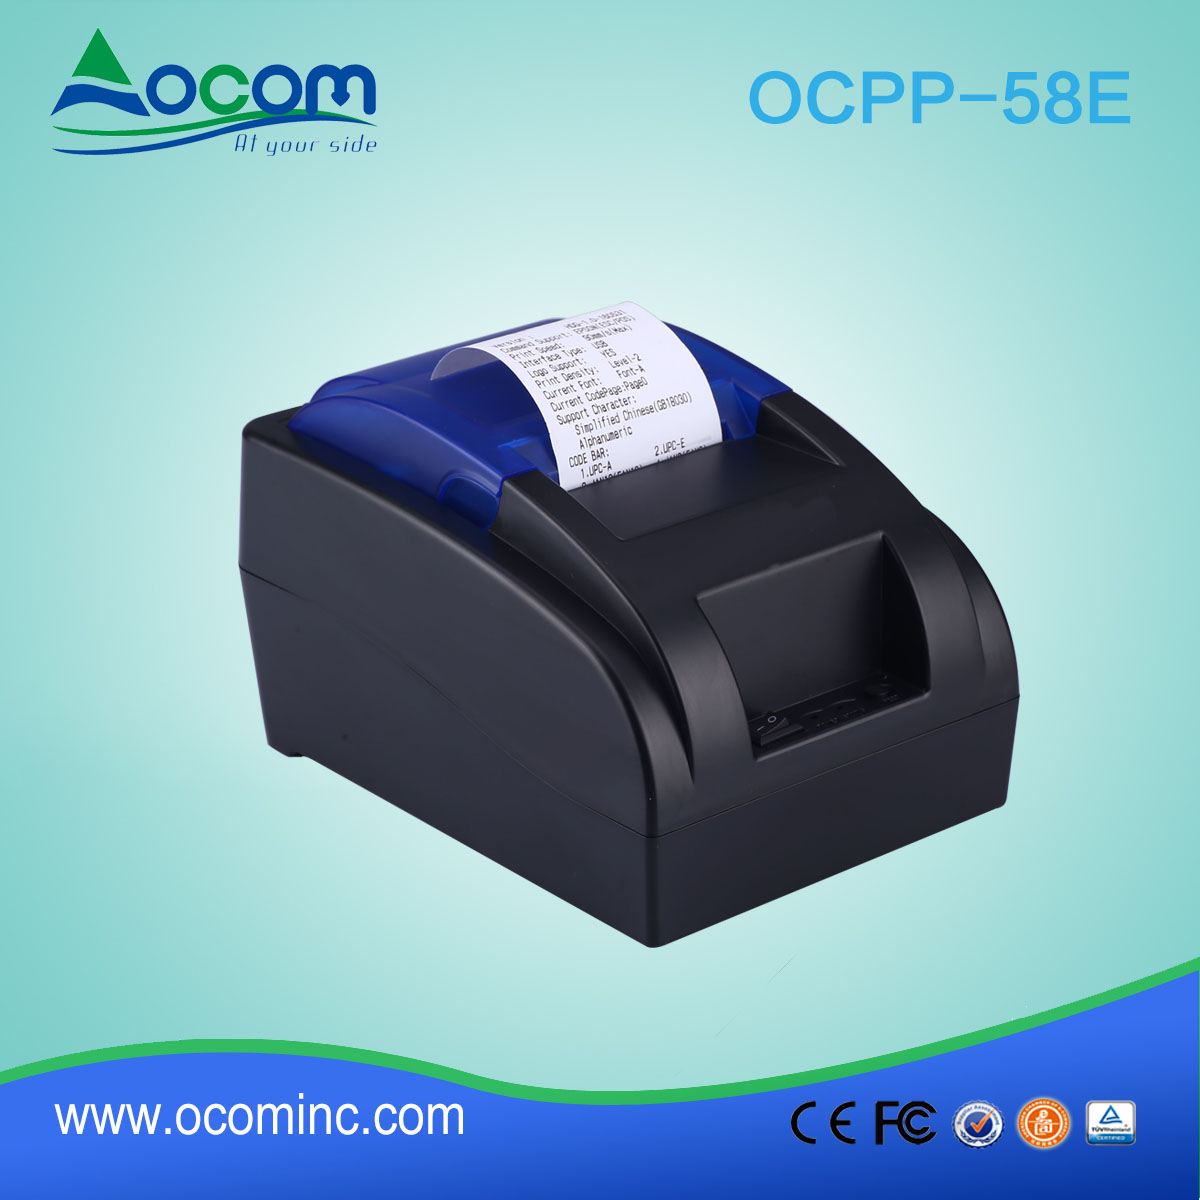 OCPP-58E εκτυπωτής θερμικής απόδοσης 58 χιλιοστών